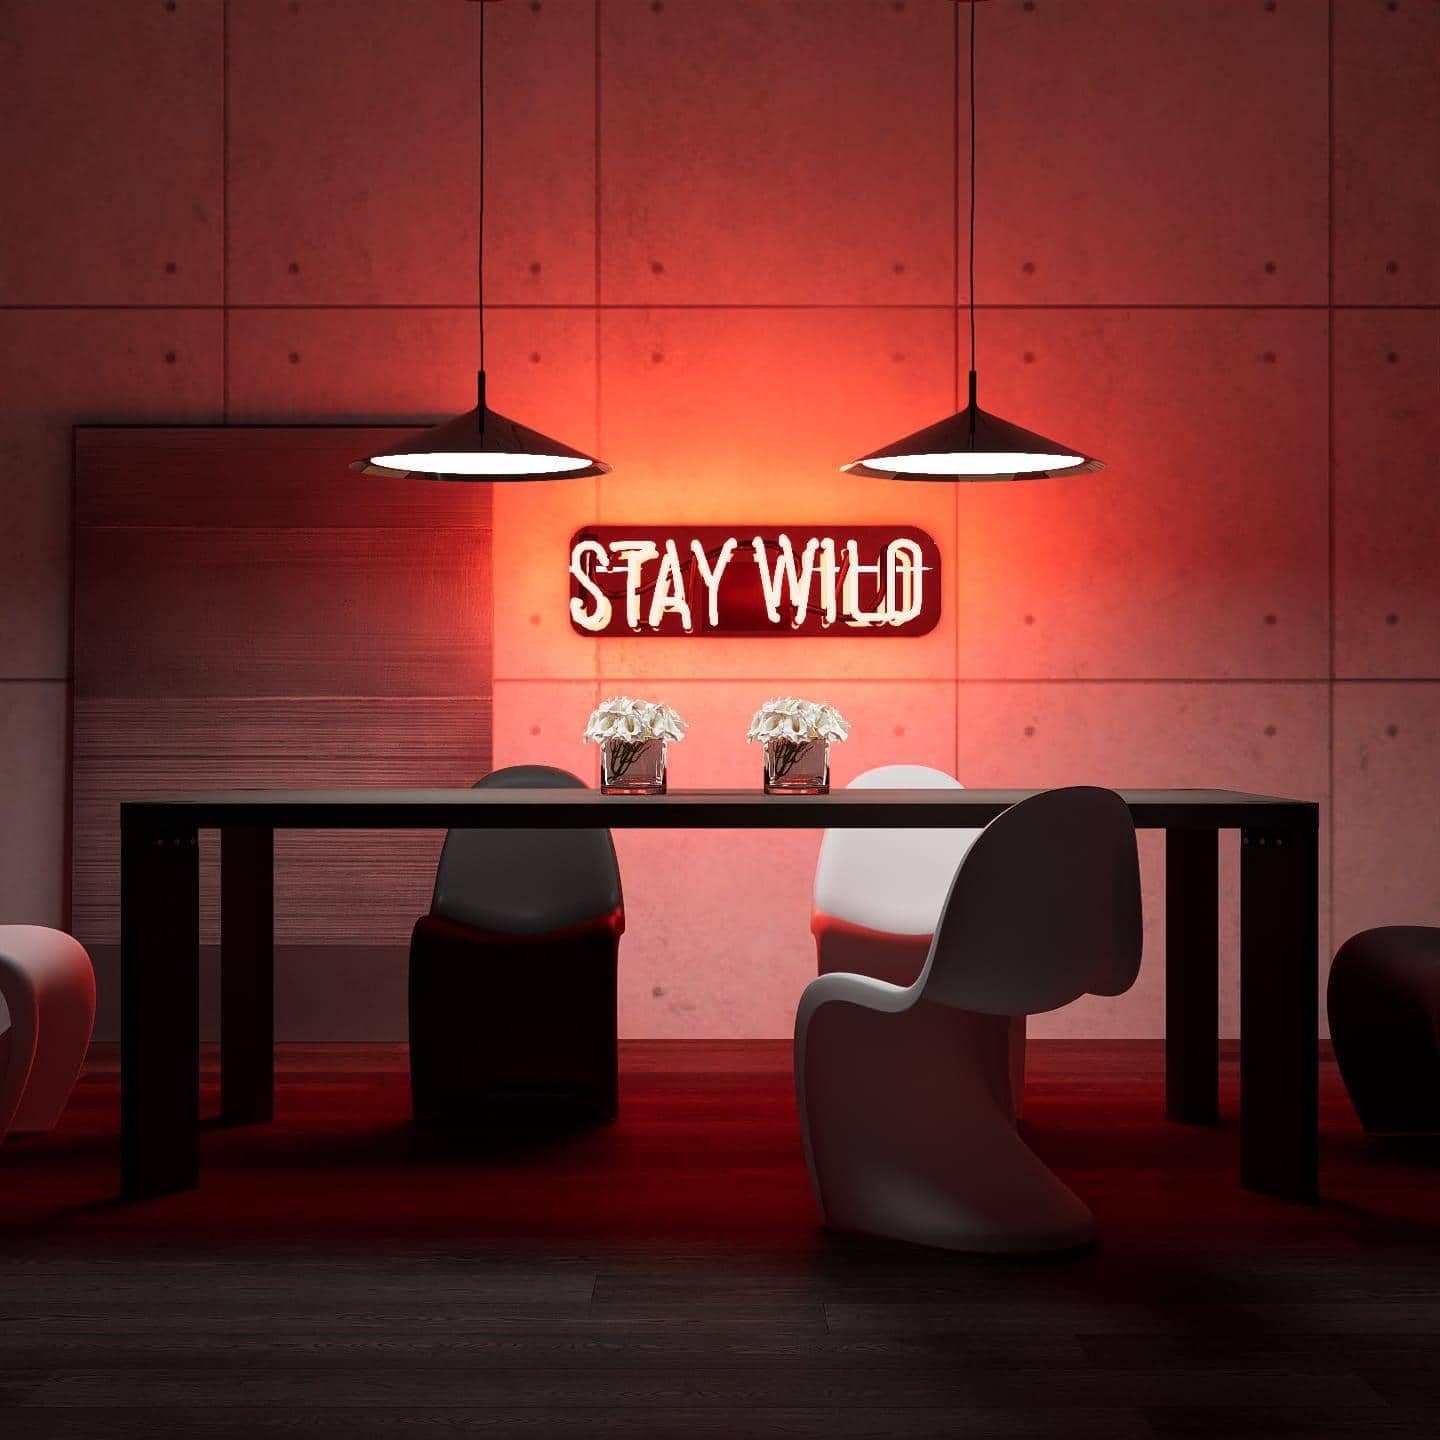 Stay wild - NeonsignLife